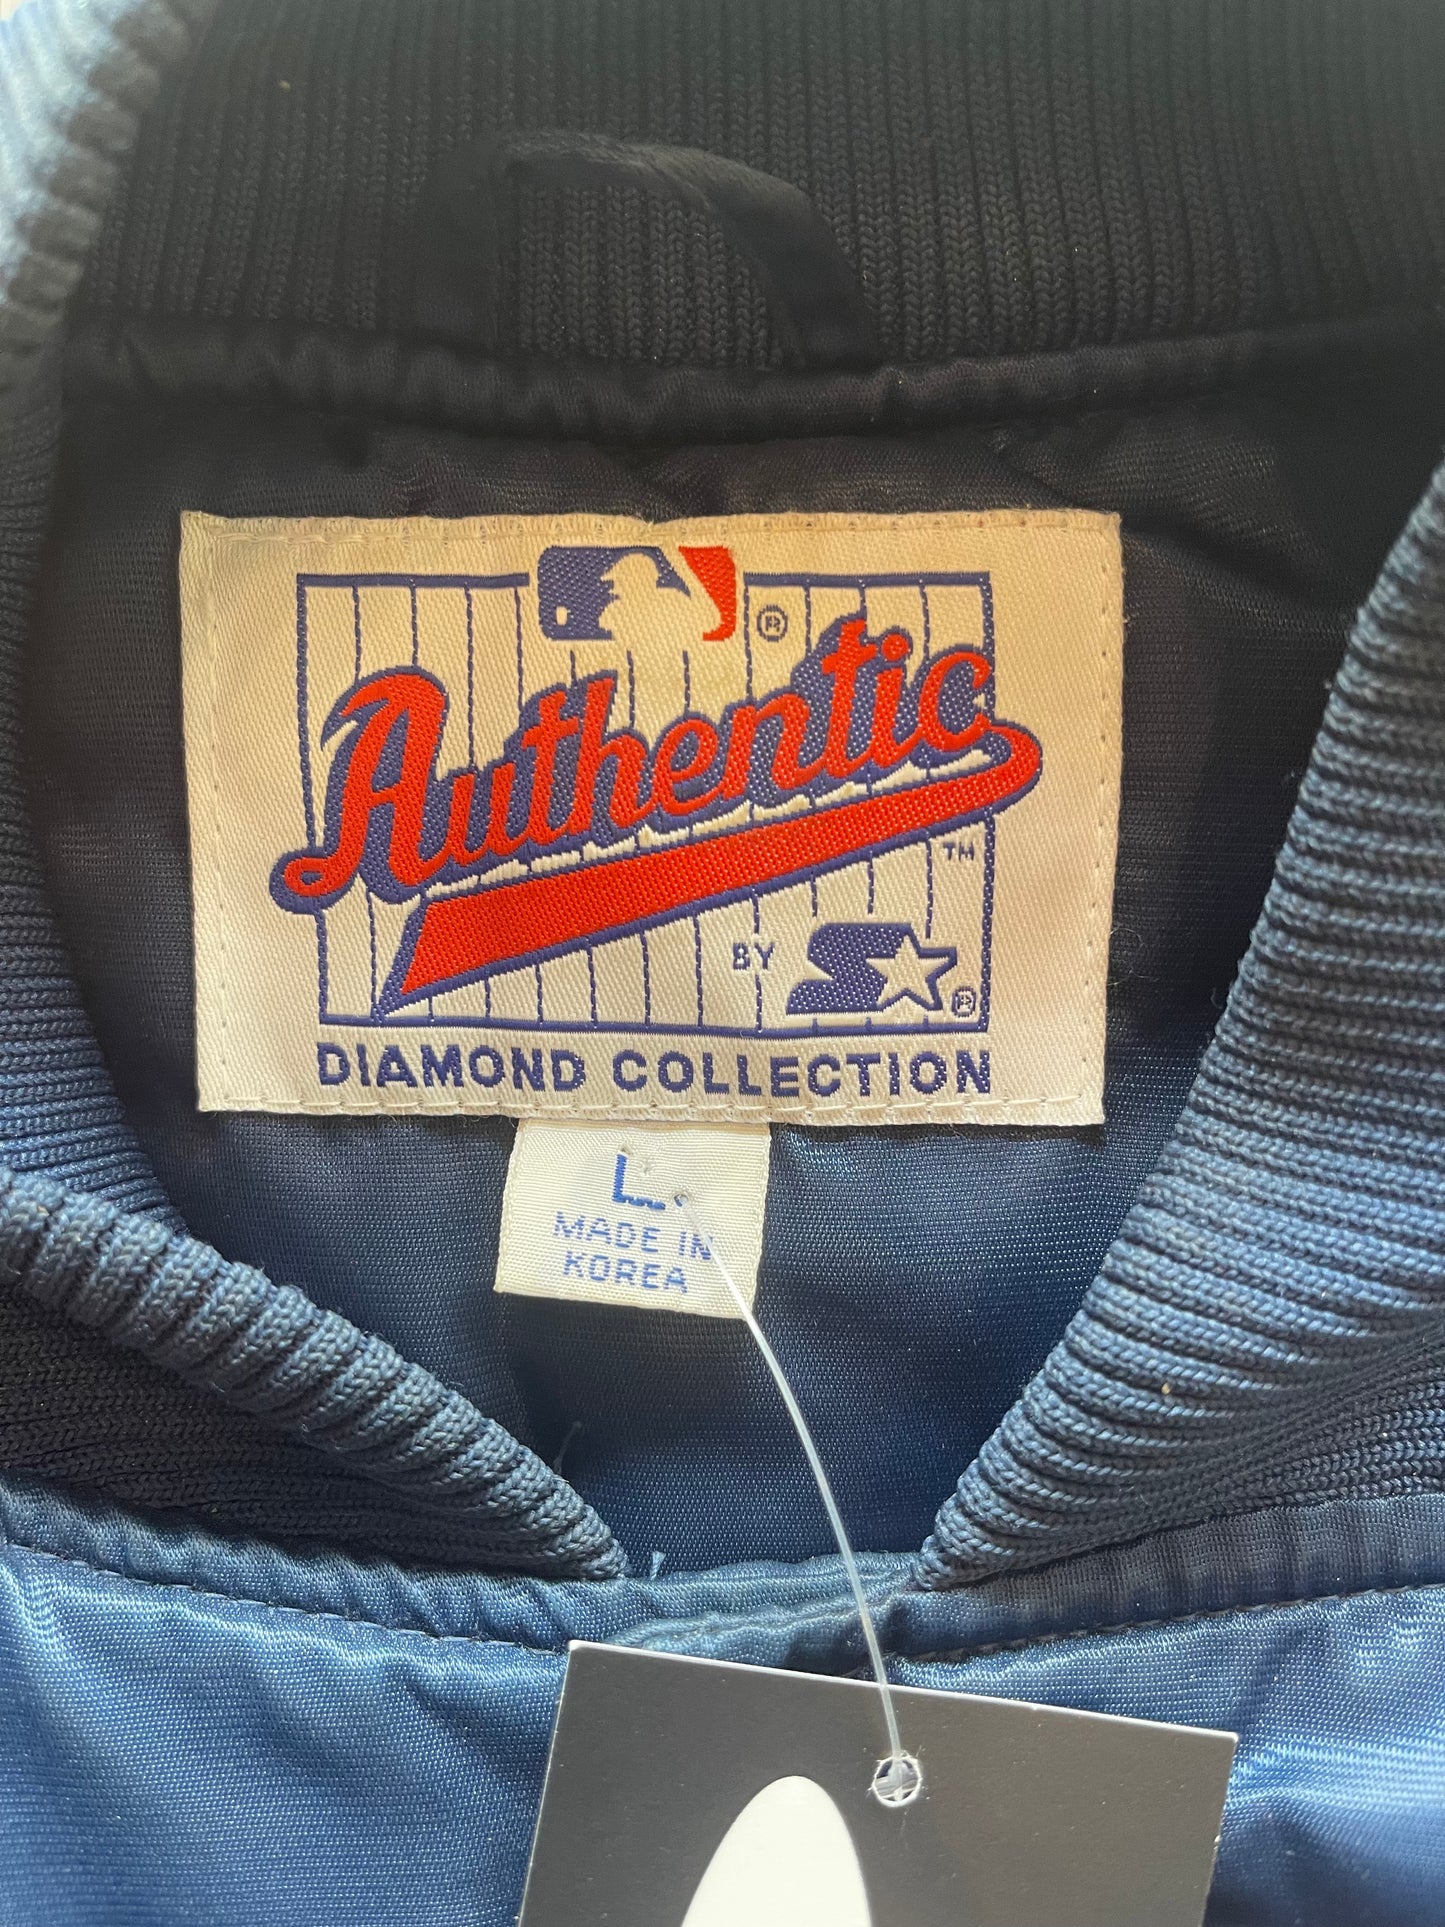 Padres baseball jacket